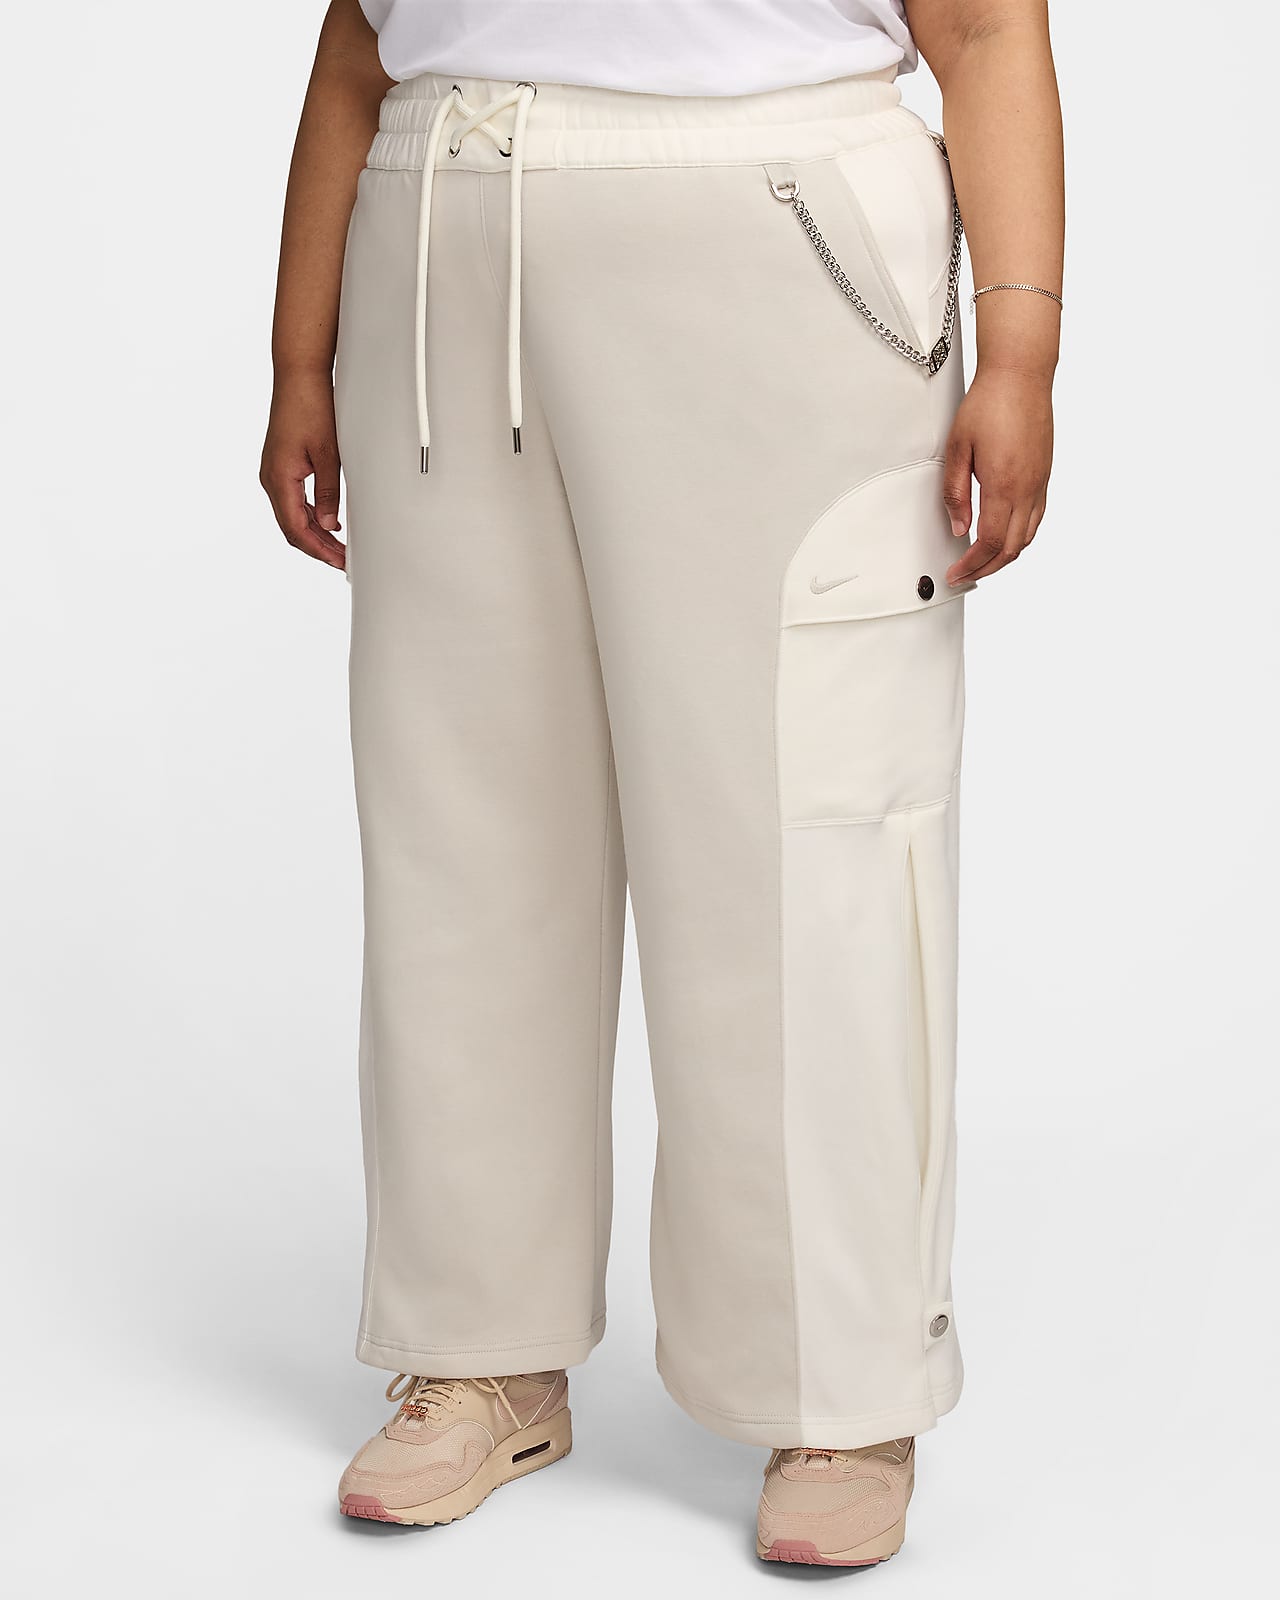 Serena Williams Design Crew Women's Fleece Pants (Plus Size)